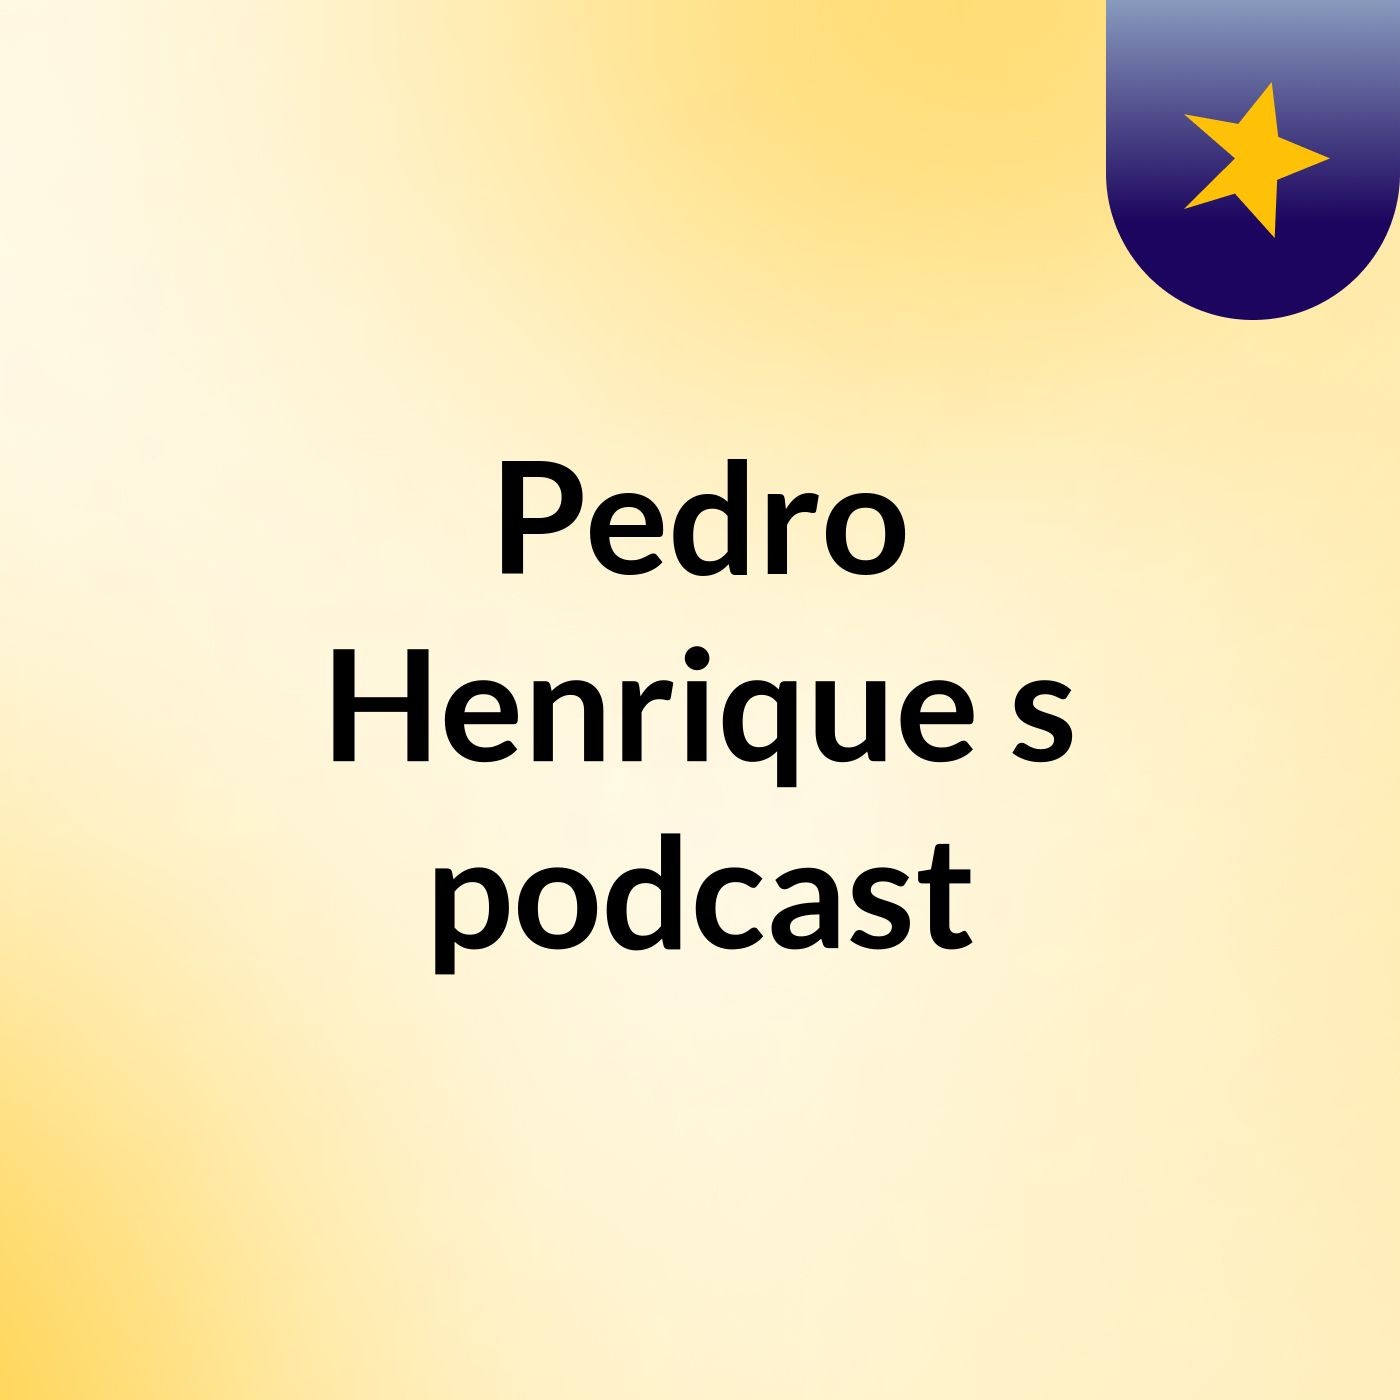 Pedro Henrique's podcast